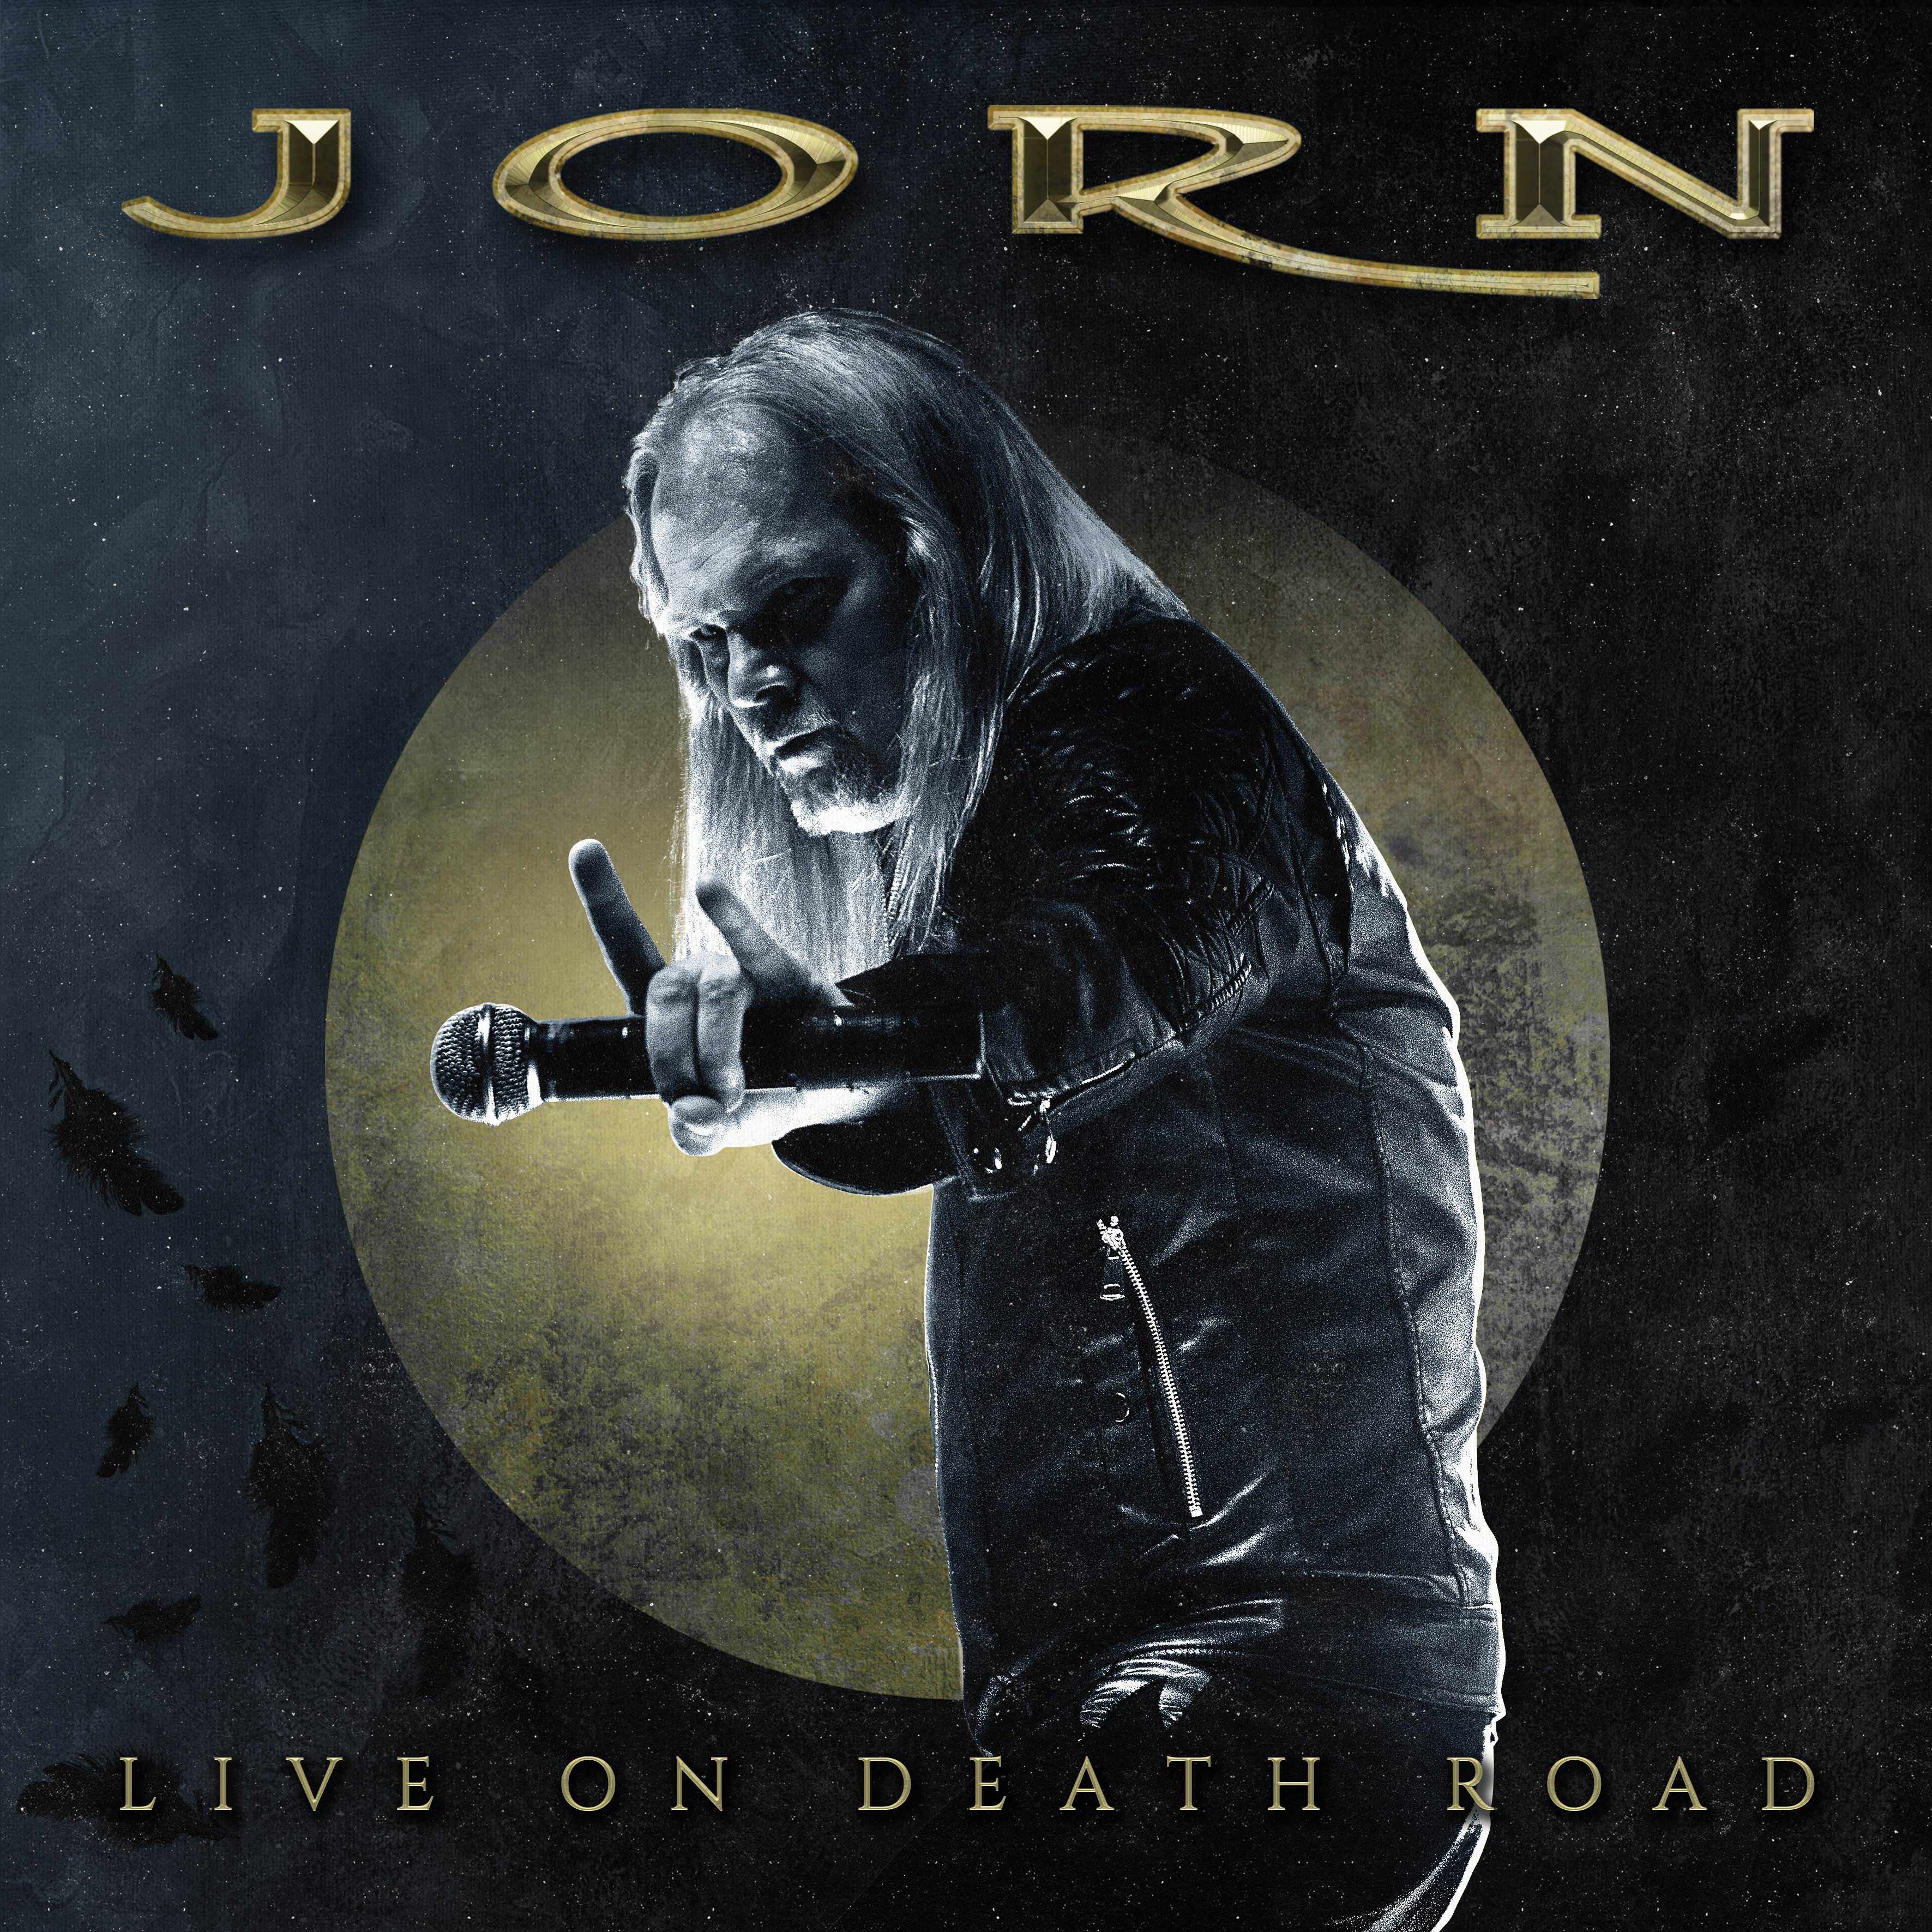 Jorn - “Live on Death Road”